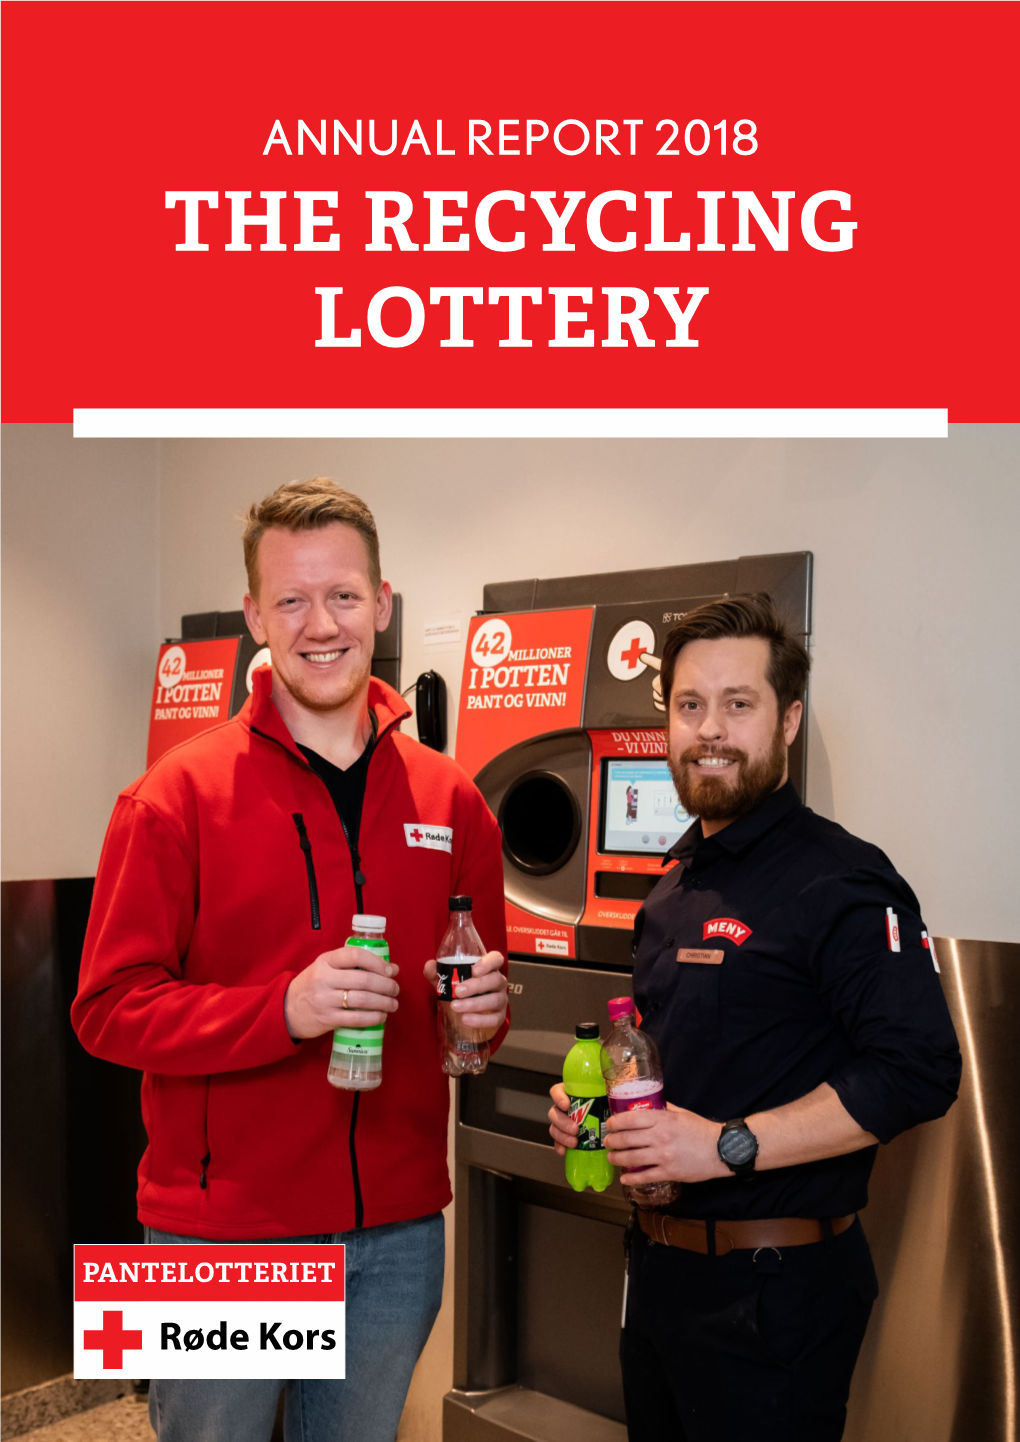 The Recycling Lottery the Recycling Lottery - Annual Report 2018